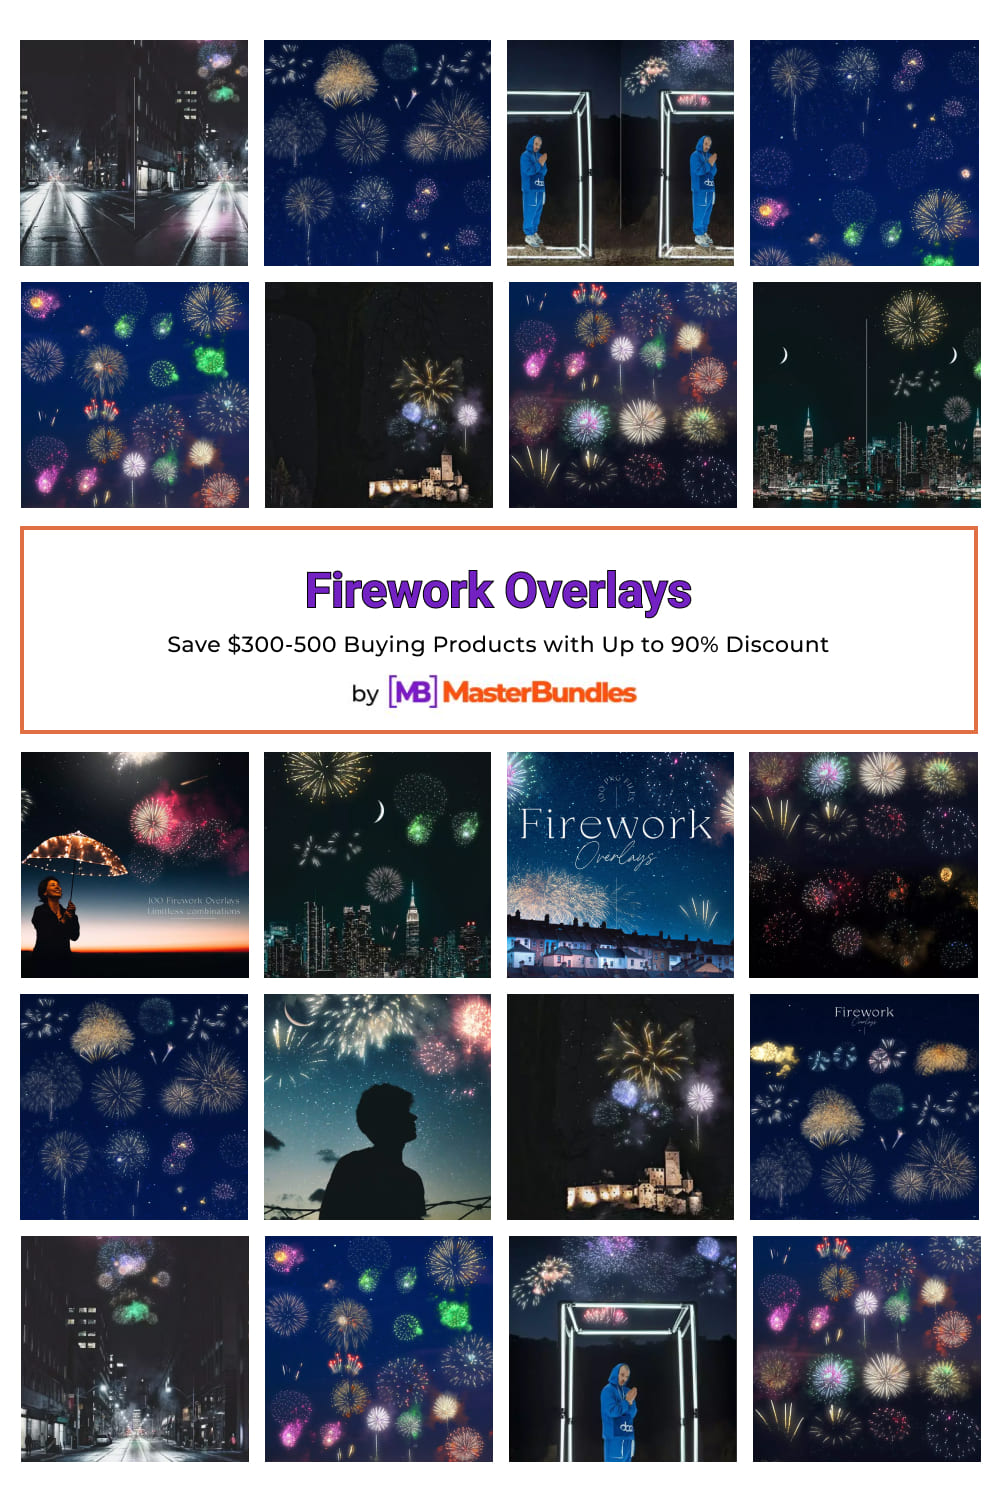 Firework Overlays Pinterest image.